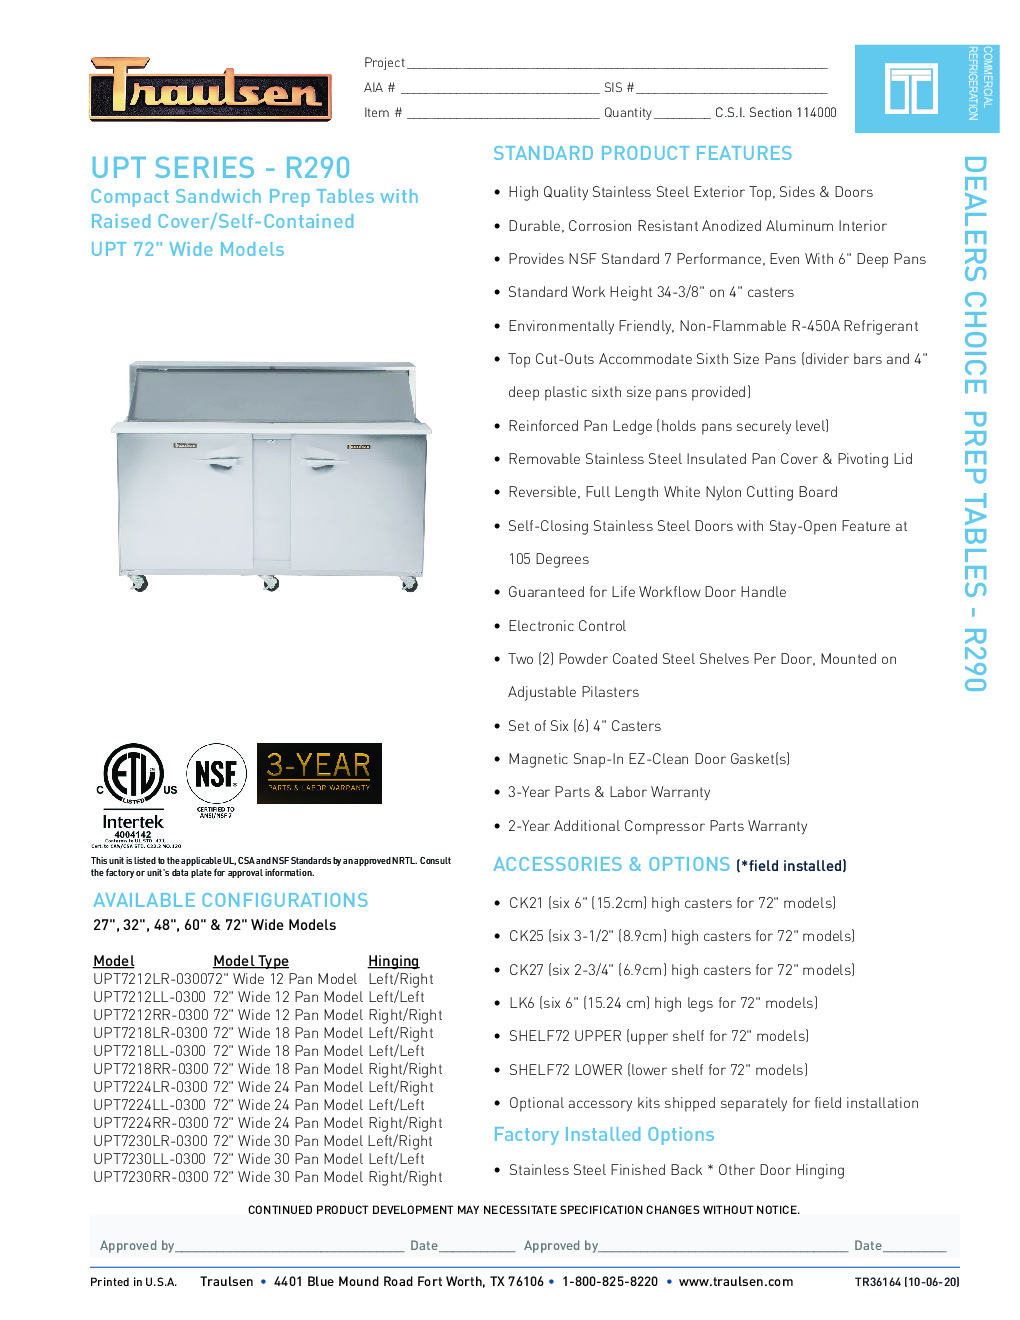 Traulsen UPT7212LL-0300 Sandwich / Salad Unit Refrigerated Counter